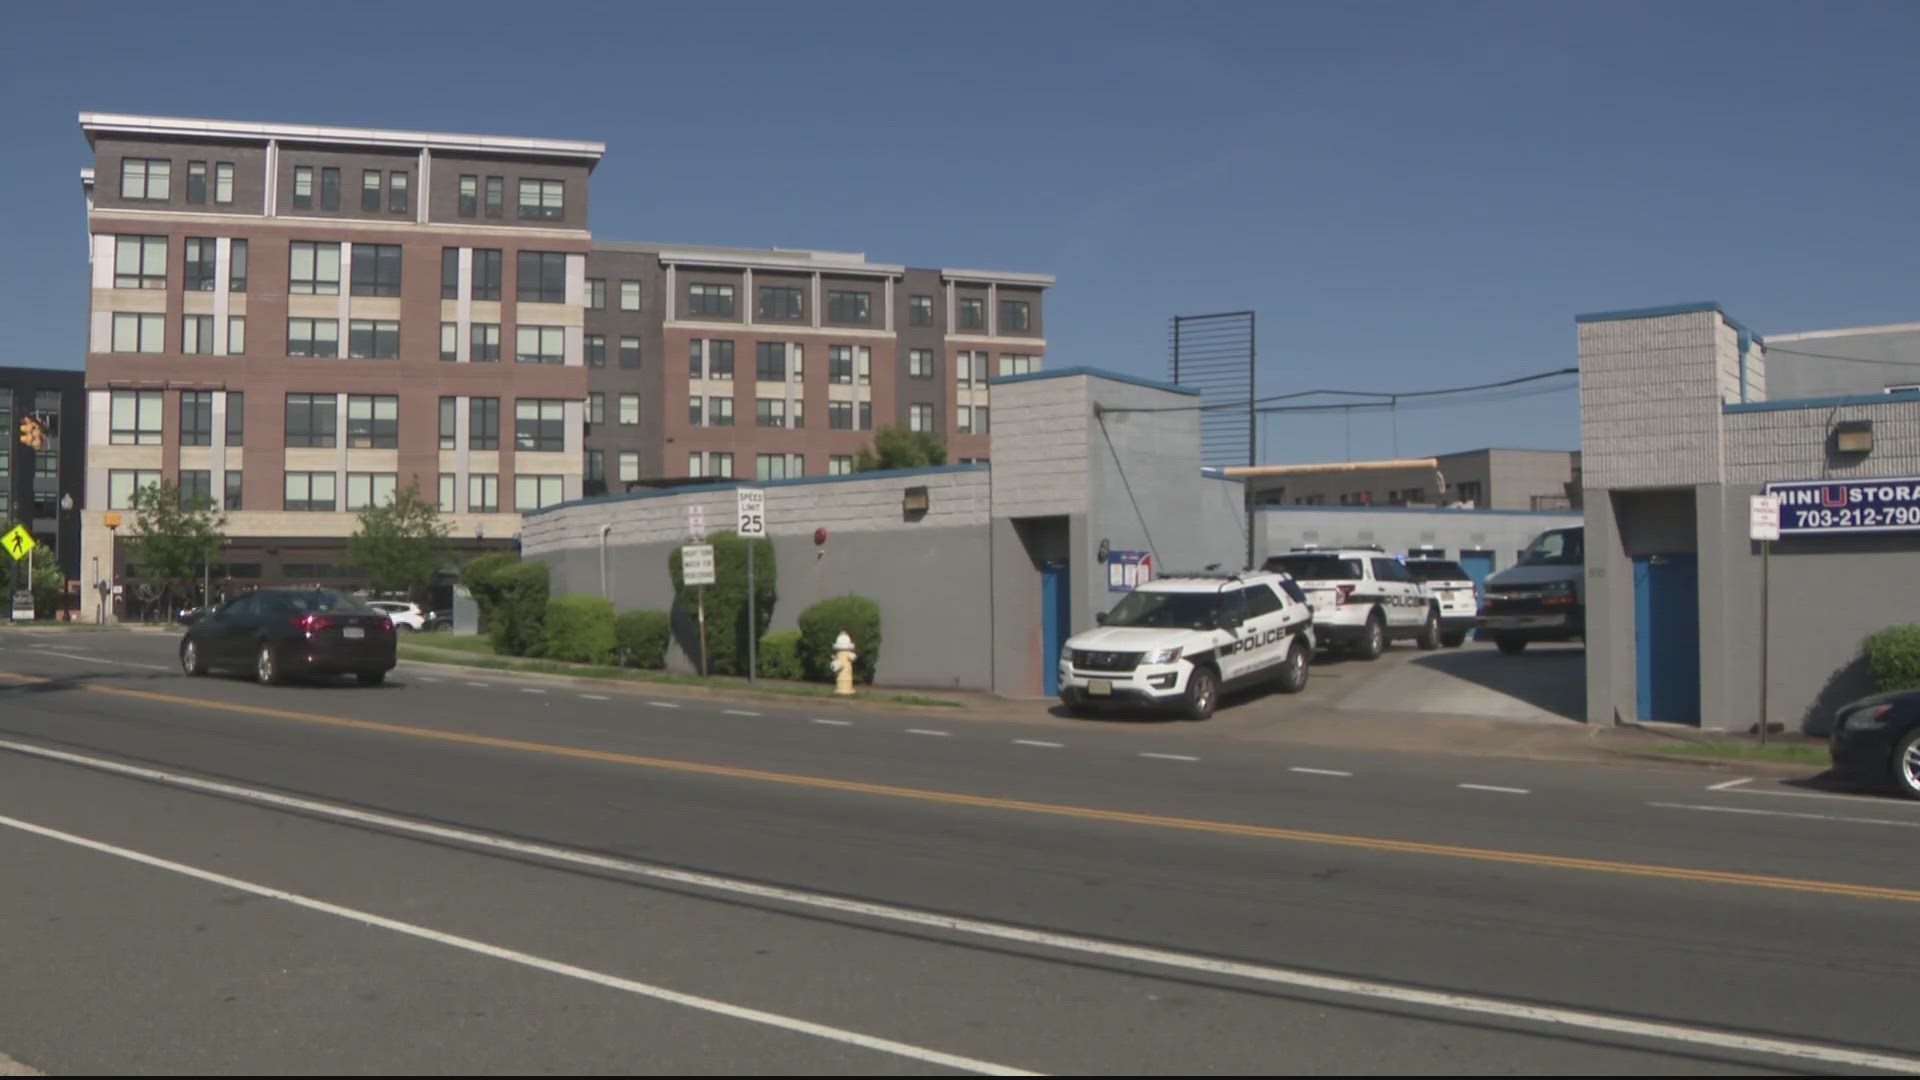 Police are investigating a death at the Mini U Storage facility in Alexandria, Virginia.